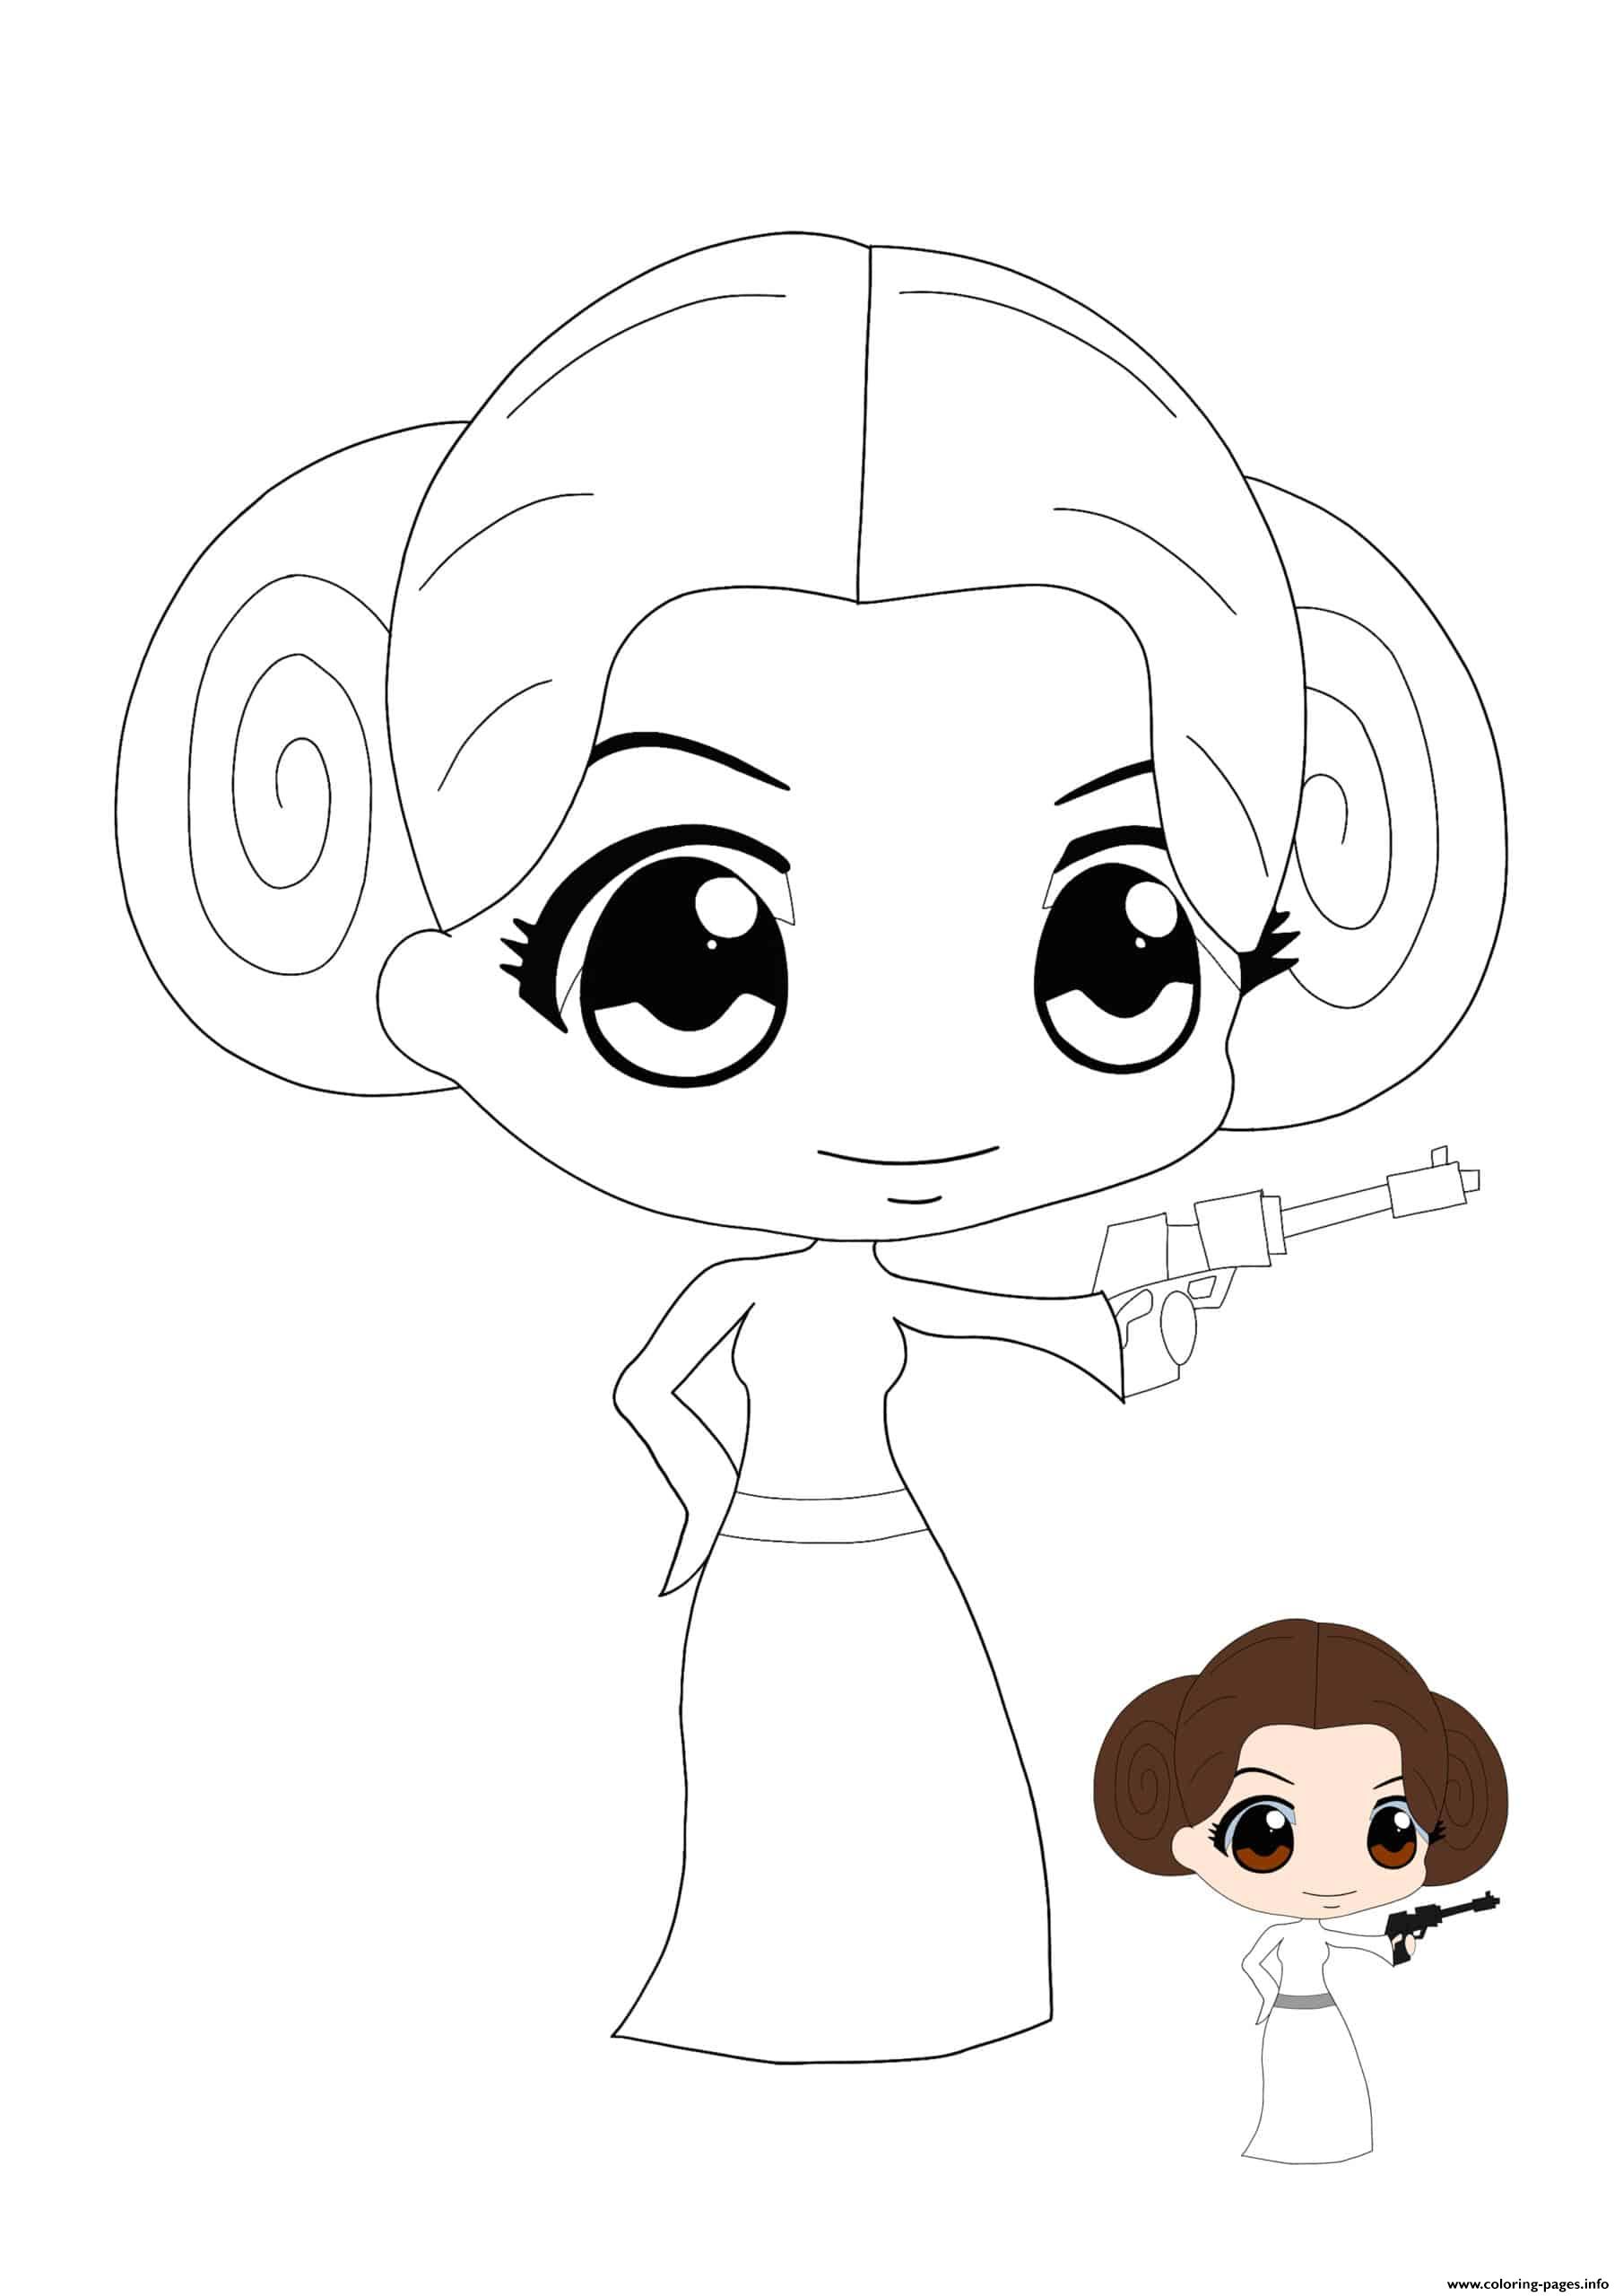 Princess Leia coloring